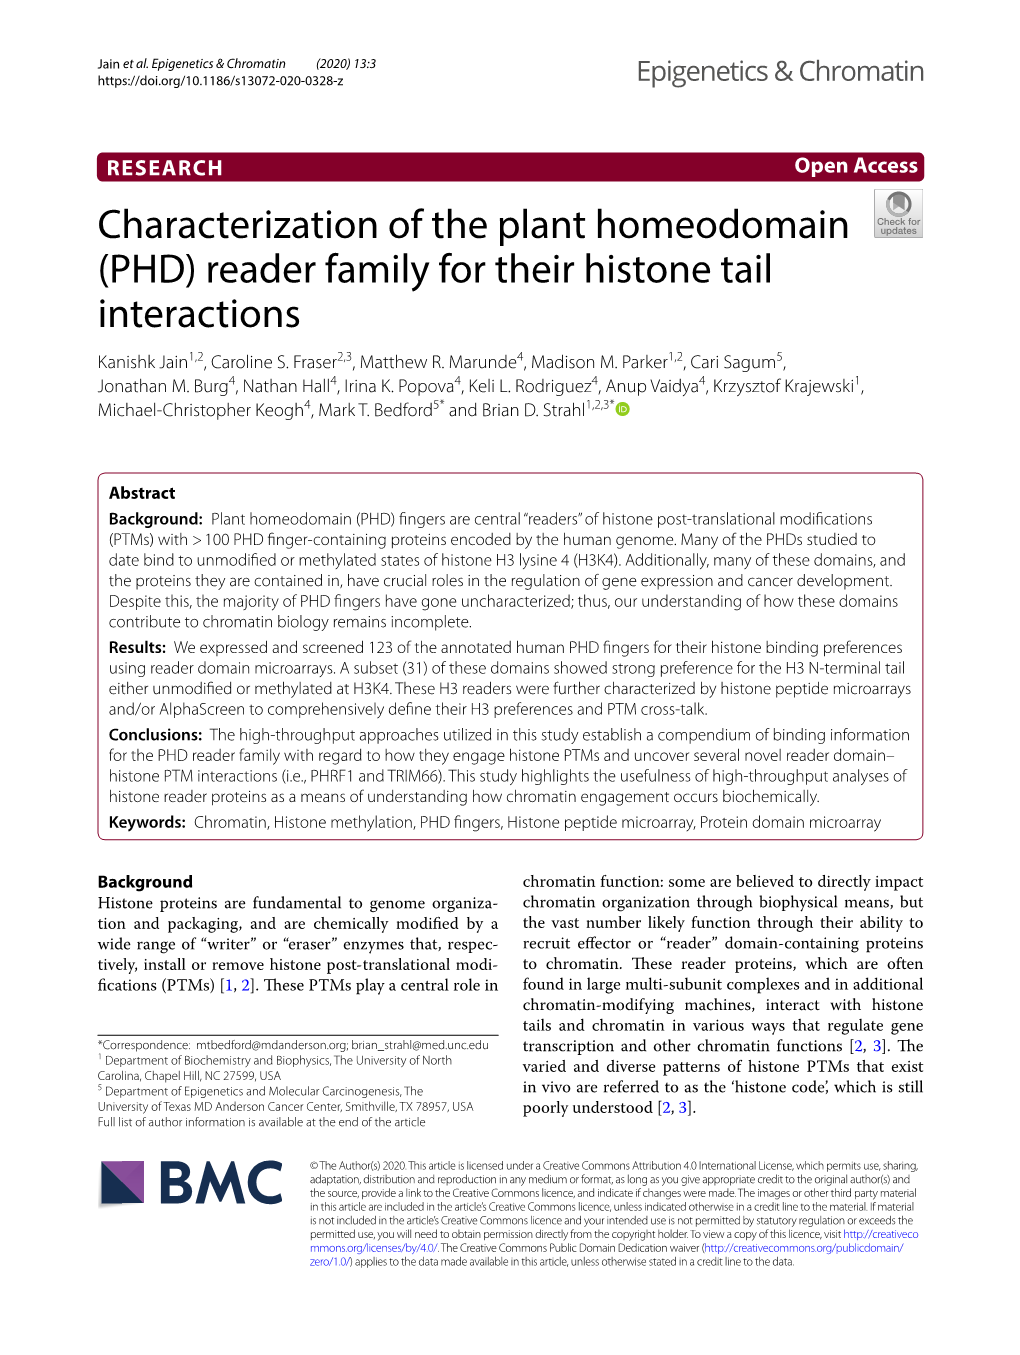 Characterization of the Plant Homeodomain (PHD) Reader Family for Their Histone Tail Interactions Kanishk Jain1,2, Caroline S